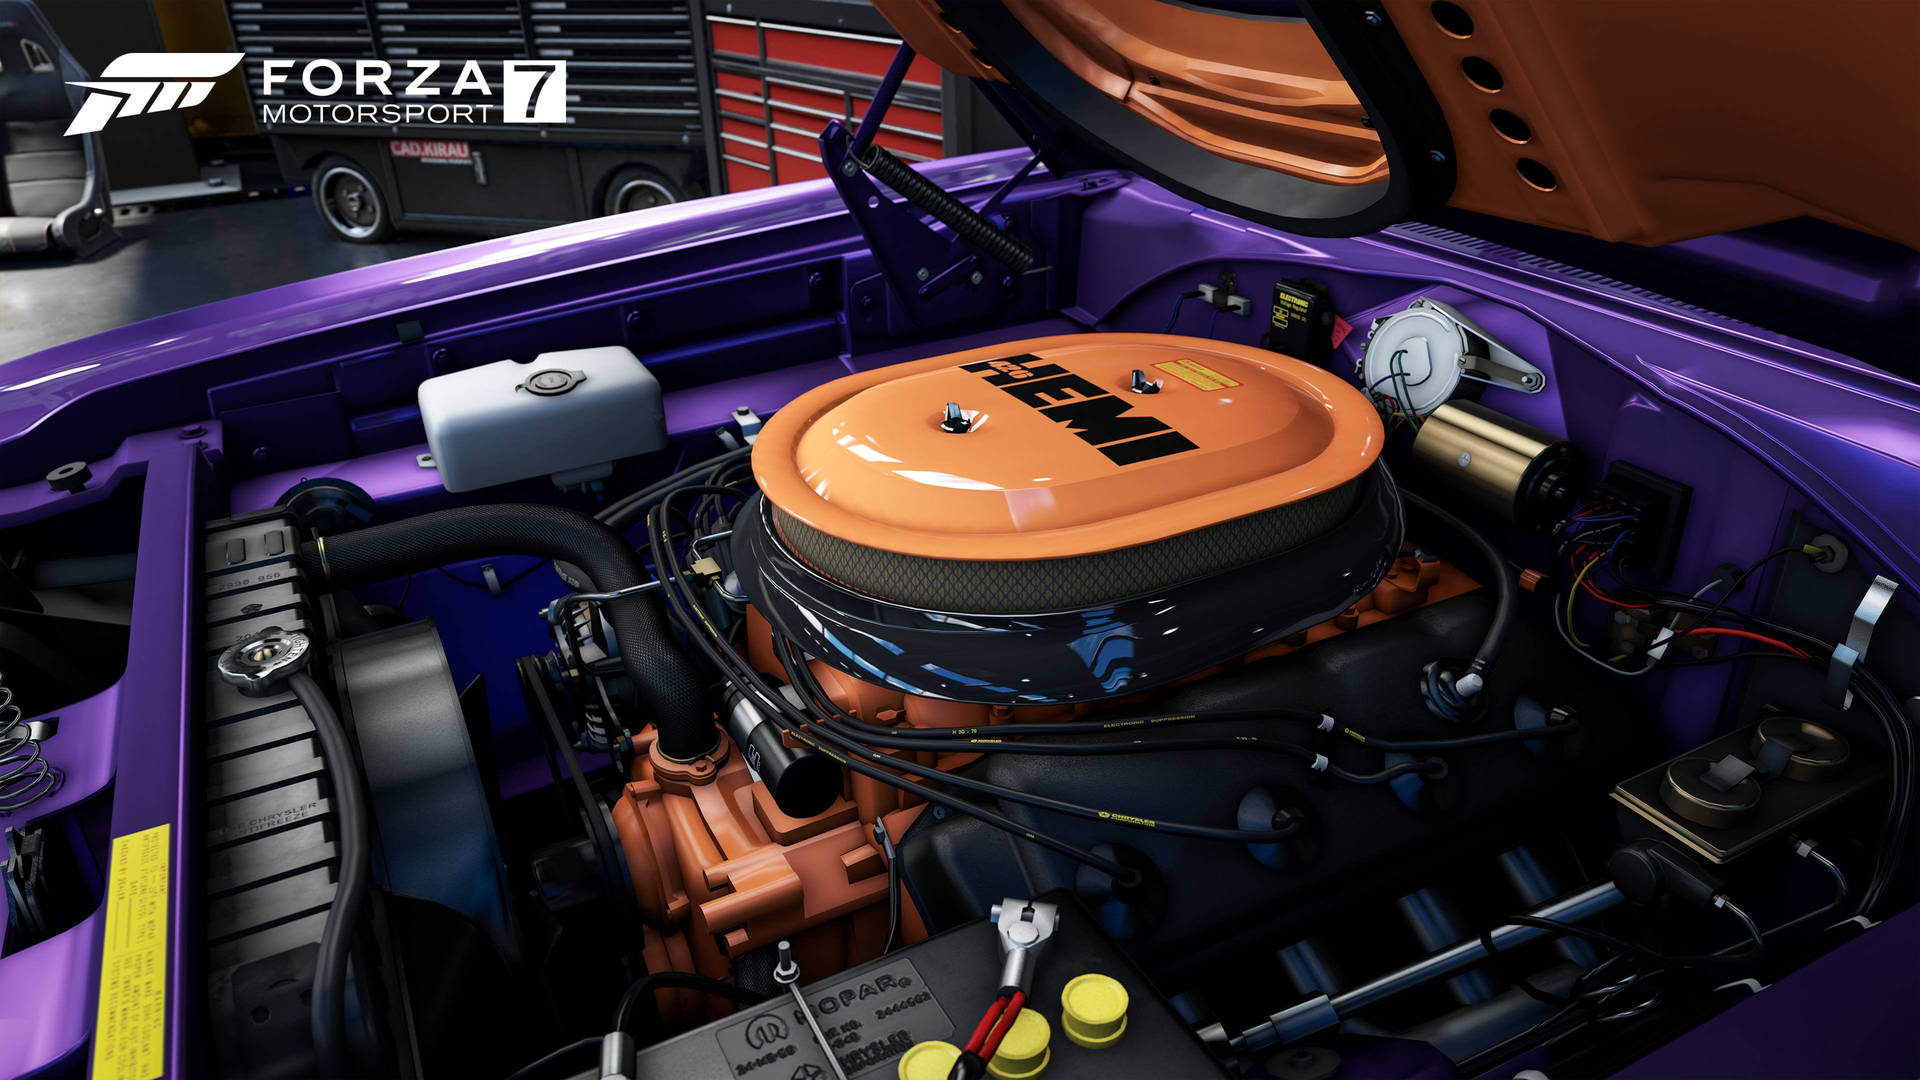 Motordodge De Forza Motorsport 7 Fondo de pantalla